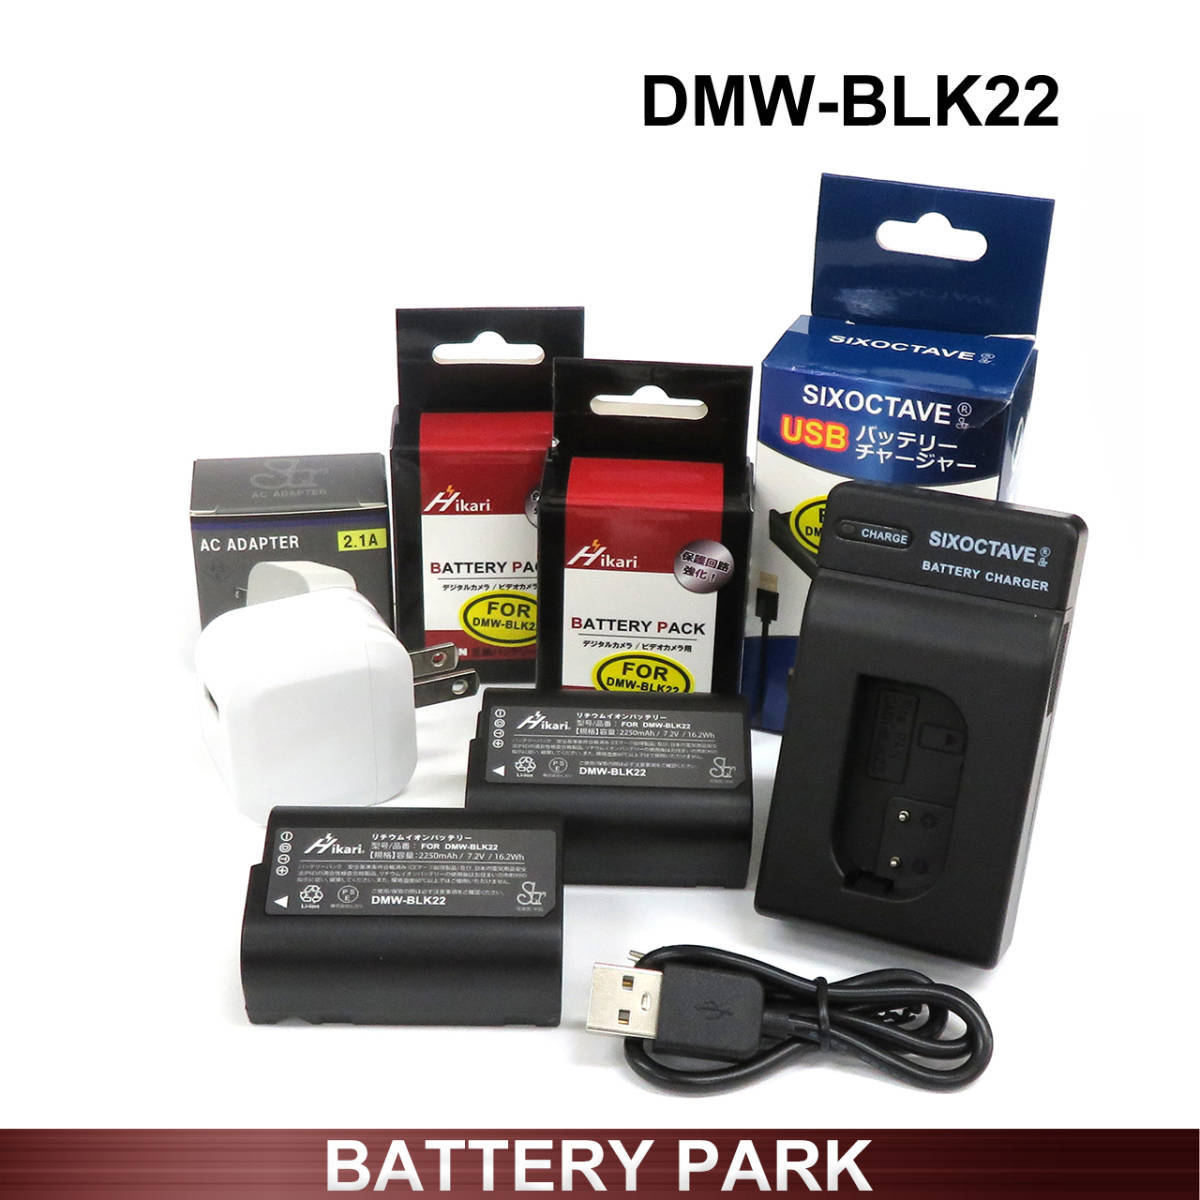 Panasonic DMW-BLK22 ヒ 大容量 互換バッテリー2個と互換充電器 DMW-BTC15 2.1A高速ACアダプター付LUMIX DC-GH5 DC-GH5S DC-GH5M2 DC-GH6